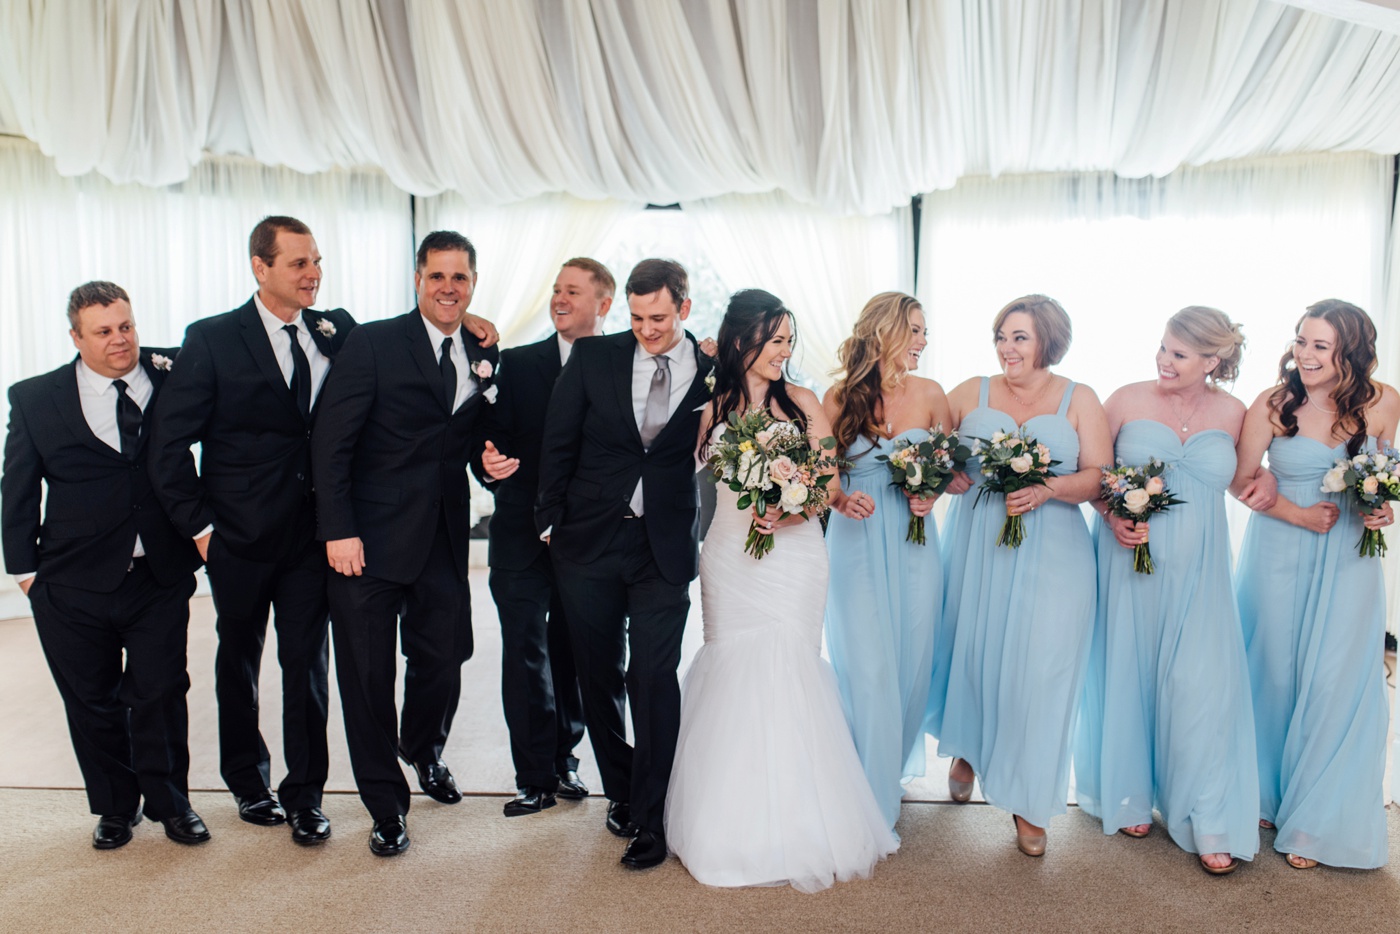 Melissa + Tom - Lambertville Station Inn Wedding - New Jersey Wedding Photographer - Alison Dunn Photography photo